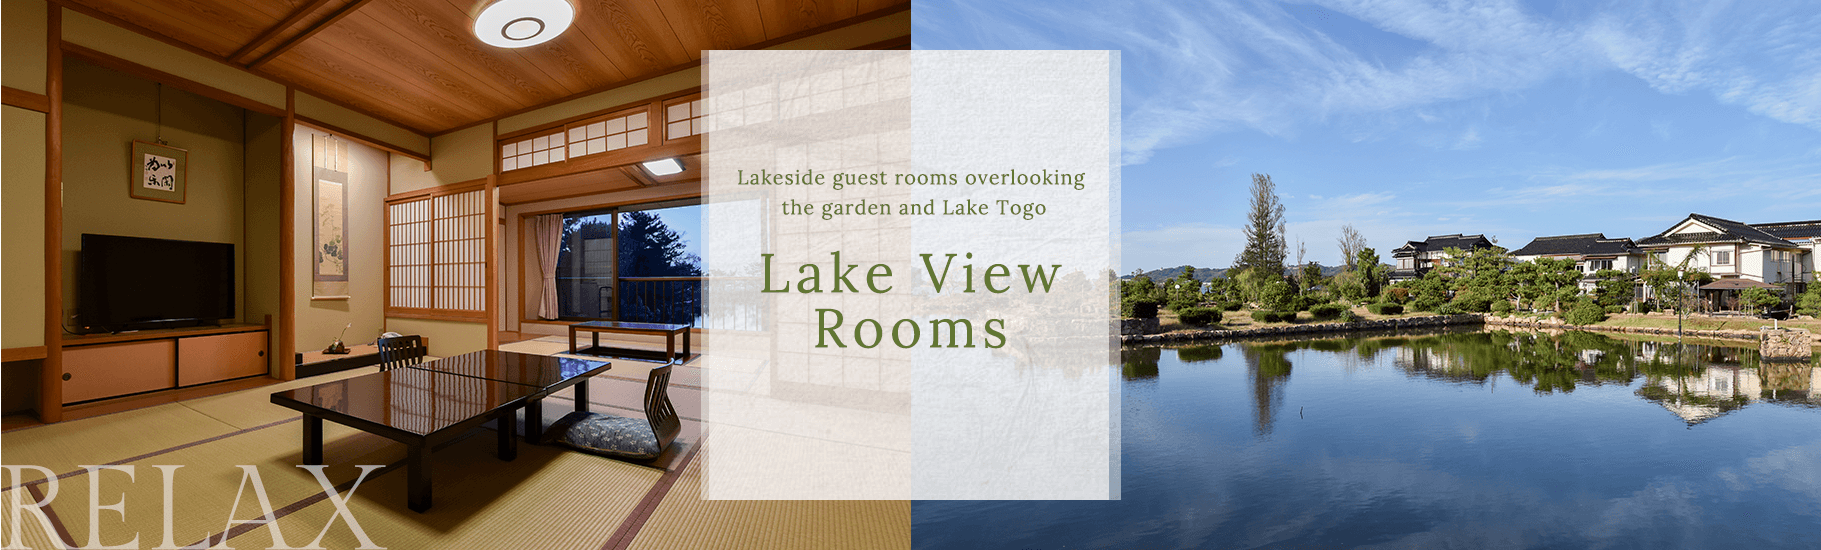 Lake View Rooms